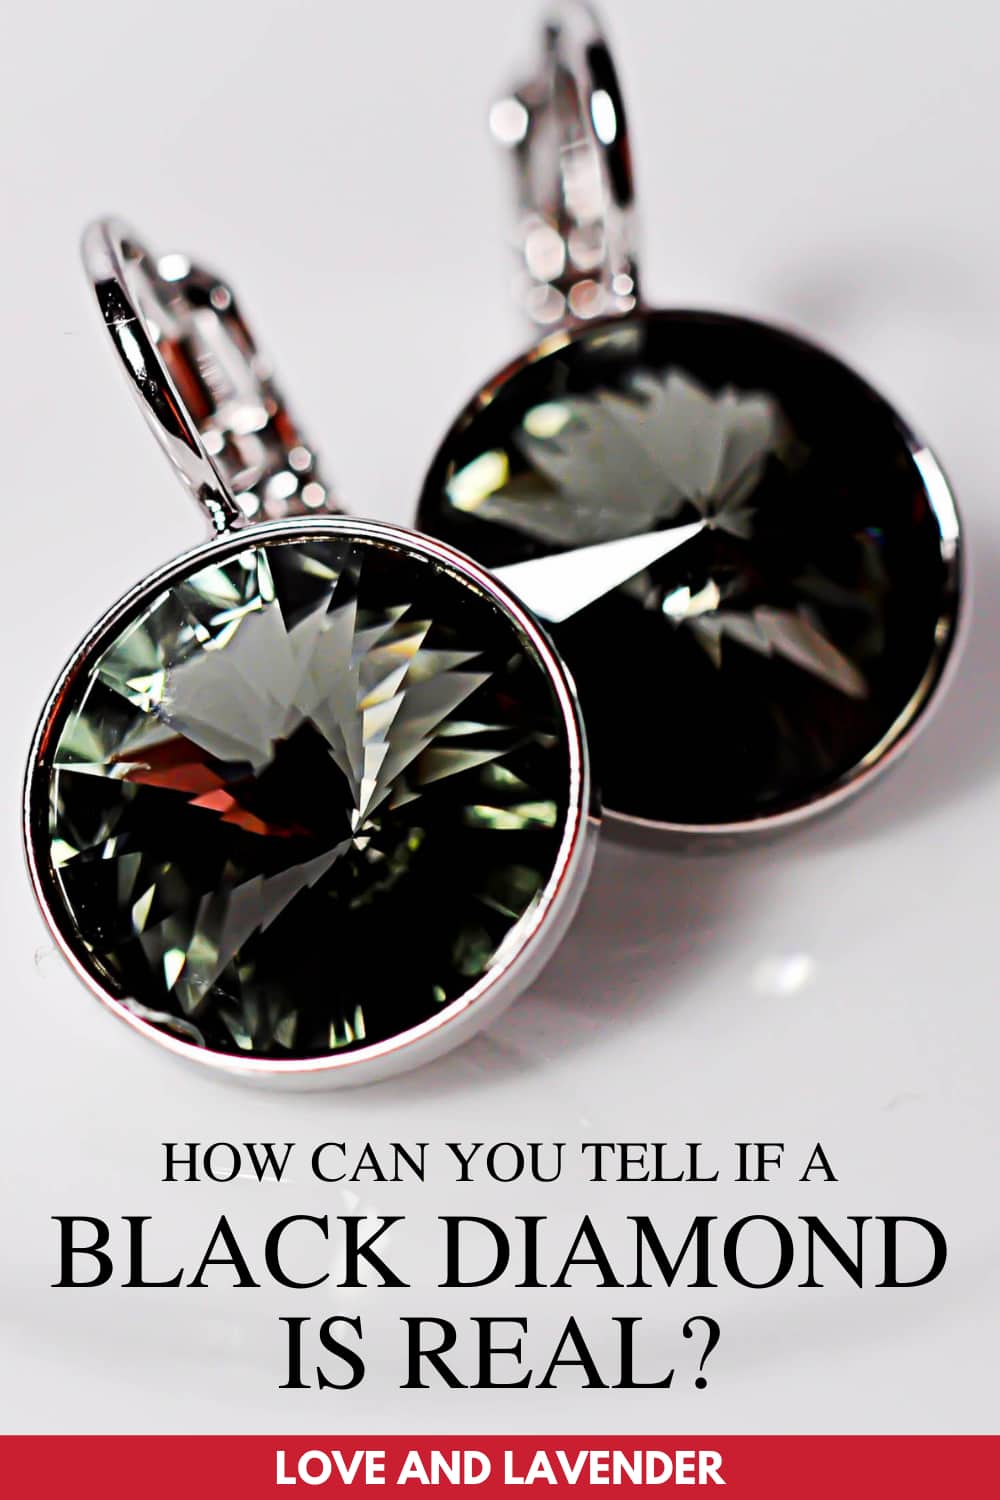 Black Diamonds - Pinterest pin